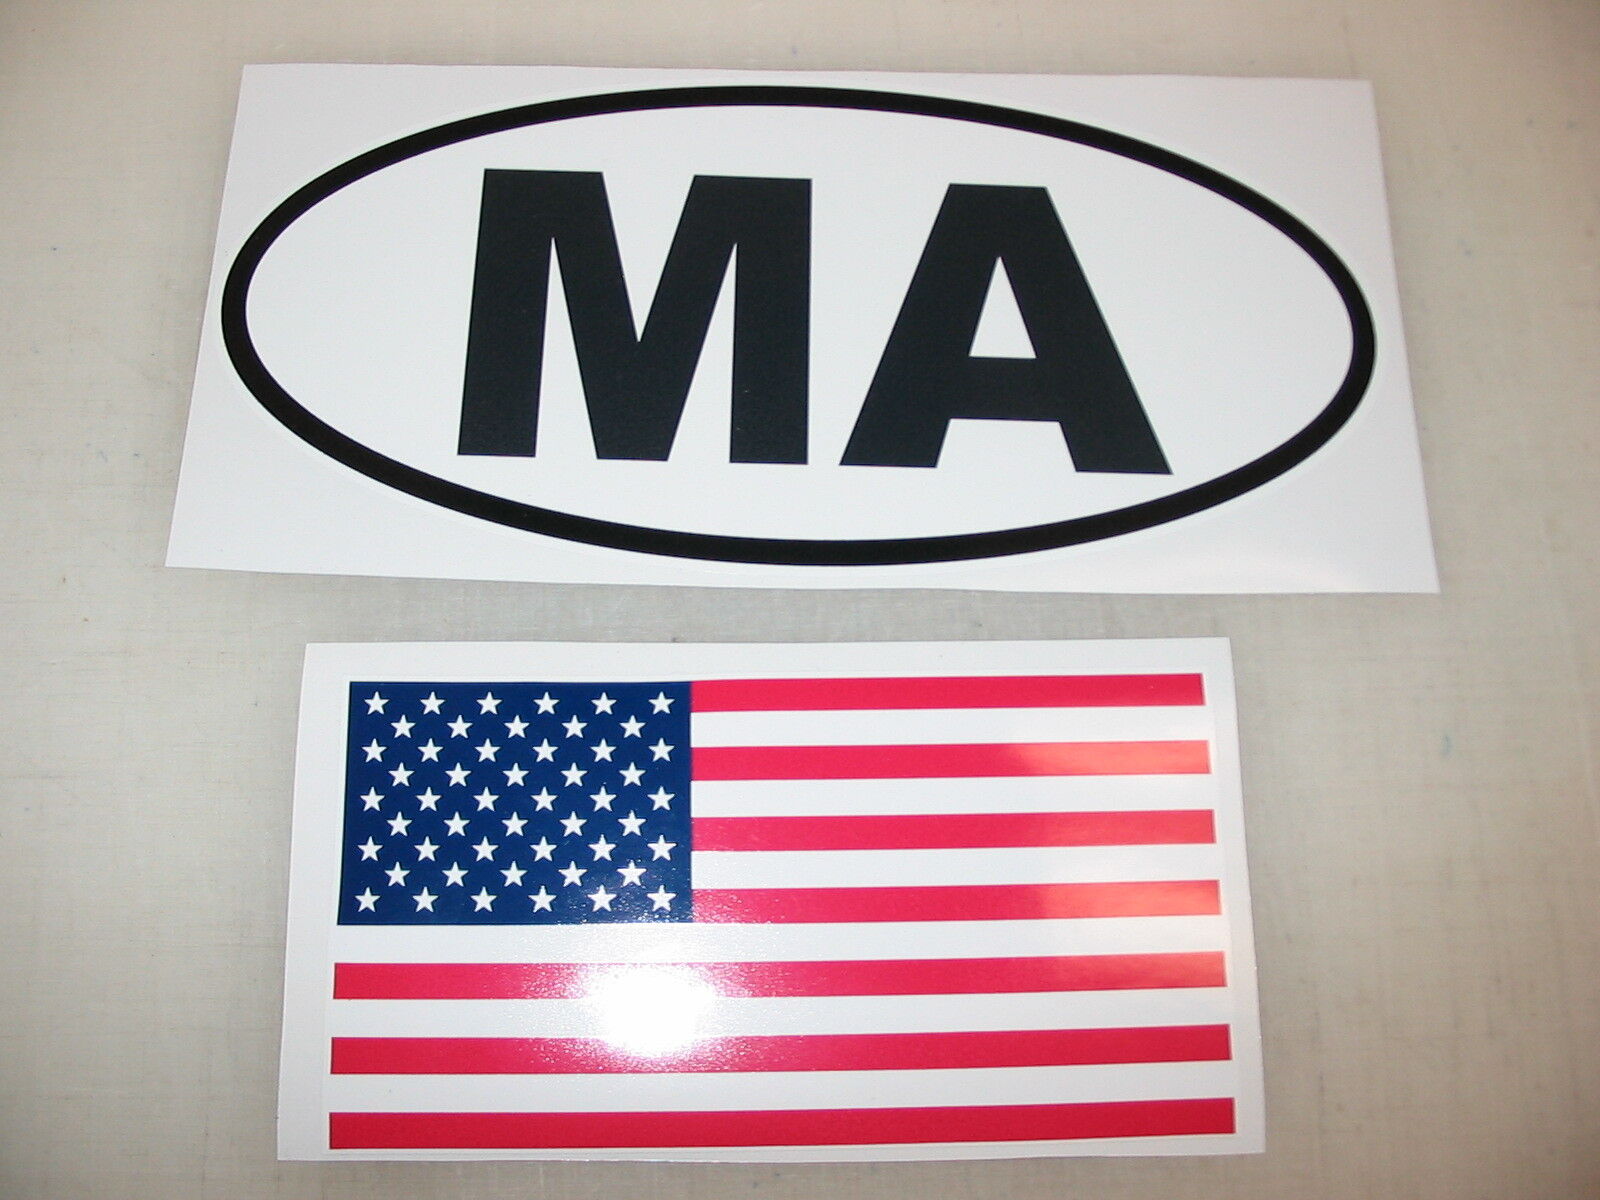 MA MASSACHUSETTS OVAL Car Window Decal Bumper Sticker + FREE USA AMERICAN Flag 